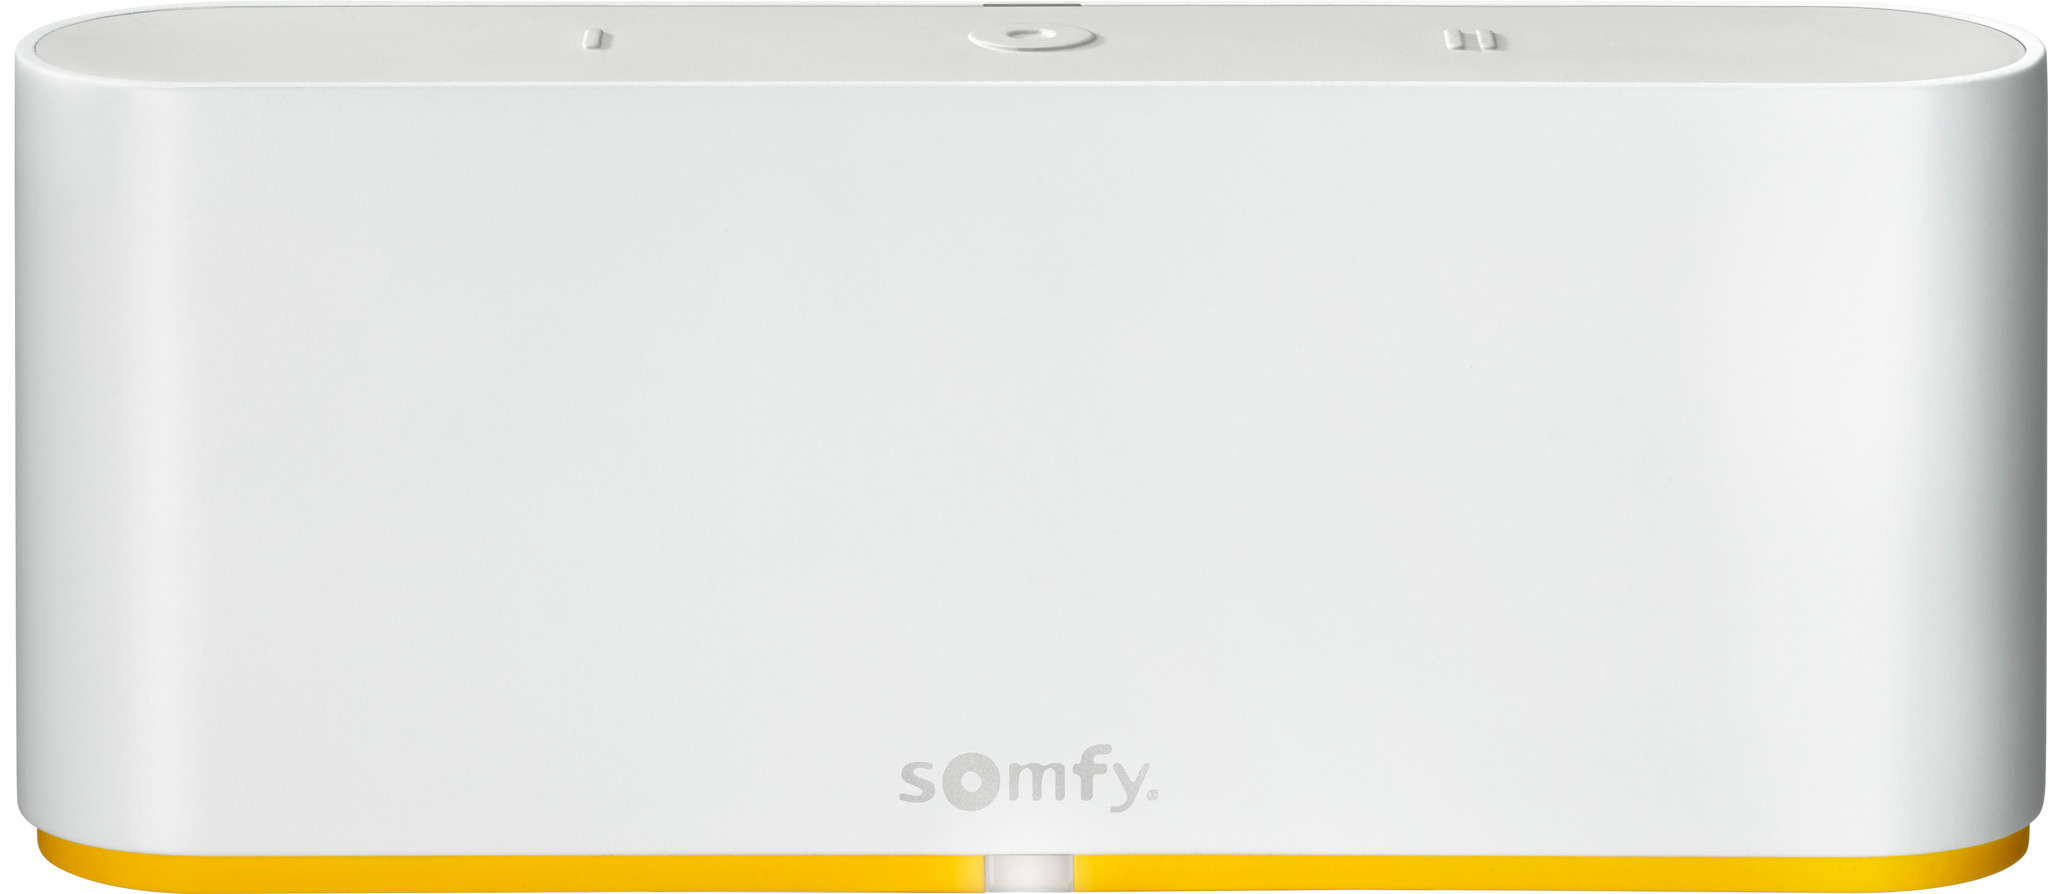 Somfy TaHoma switch Main Image